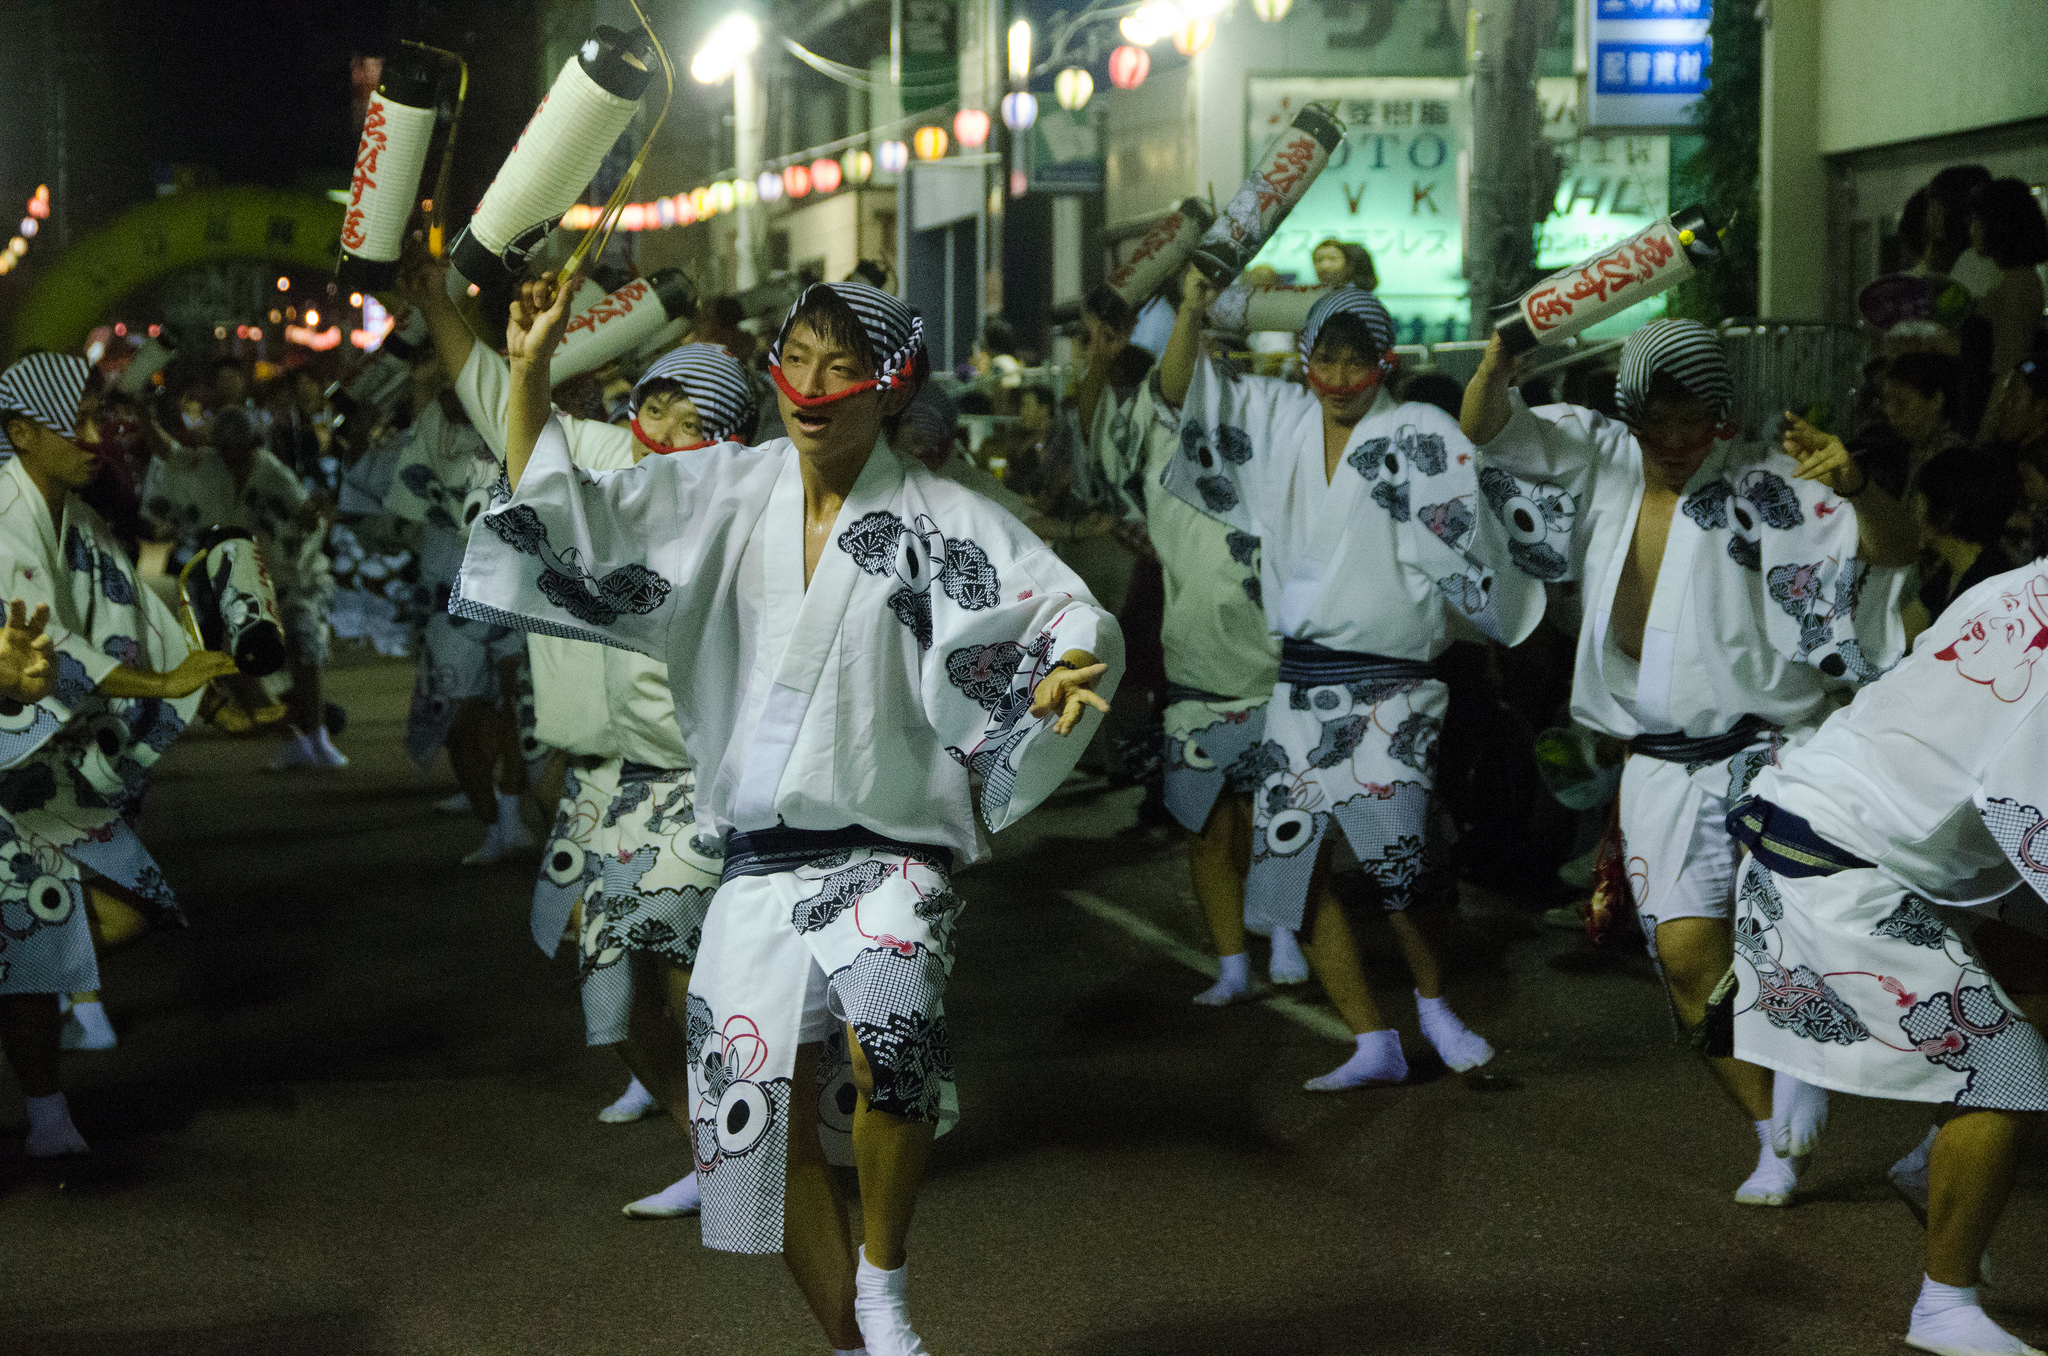 Das Awa-Tanzfestival in Tokushima.